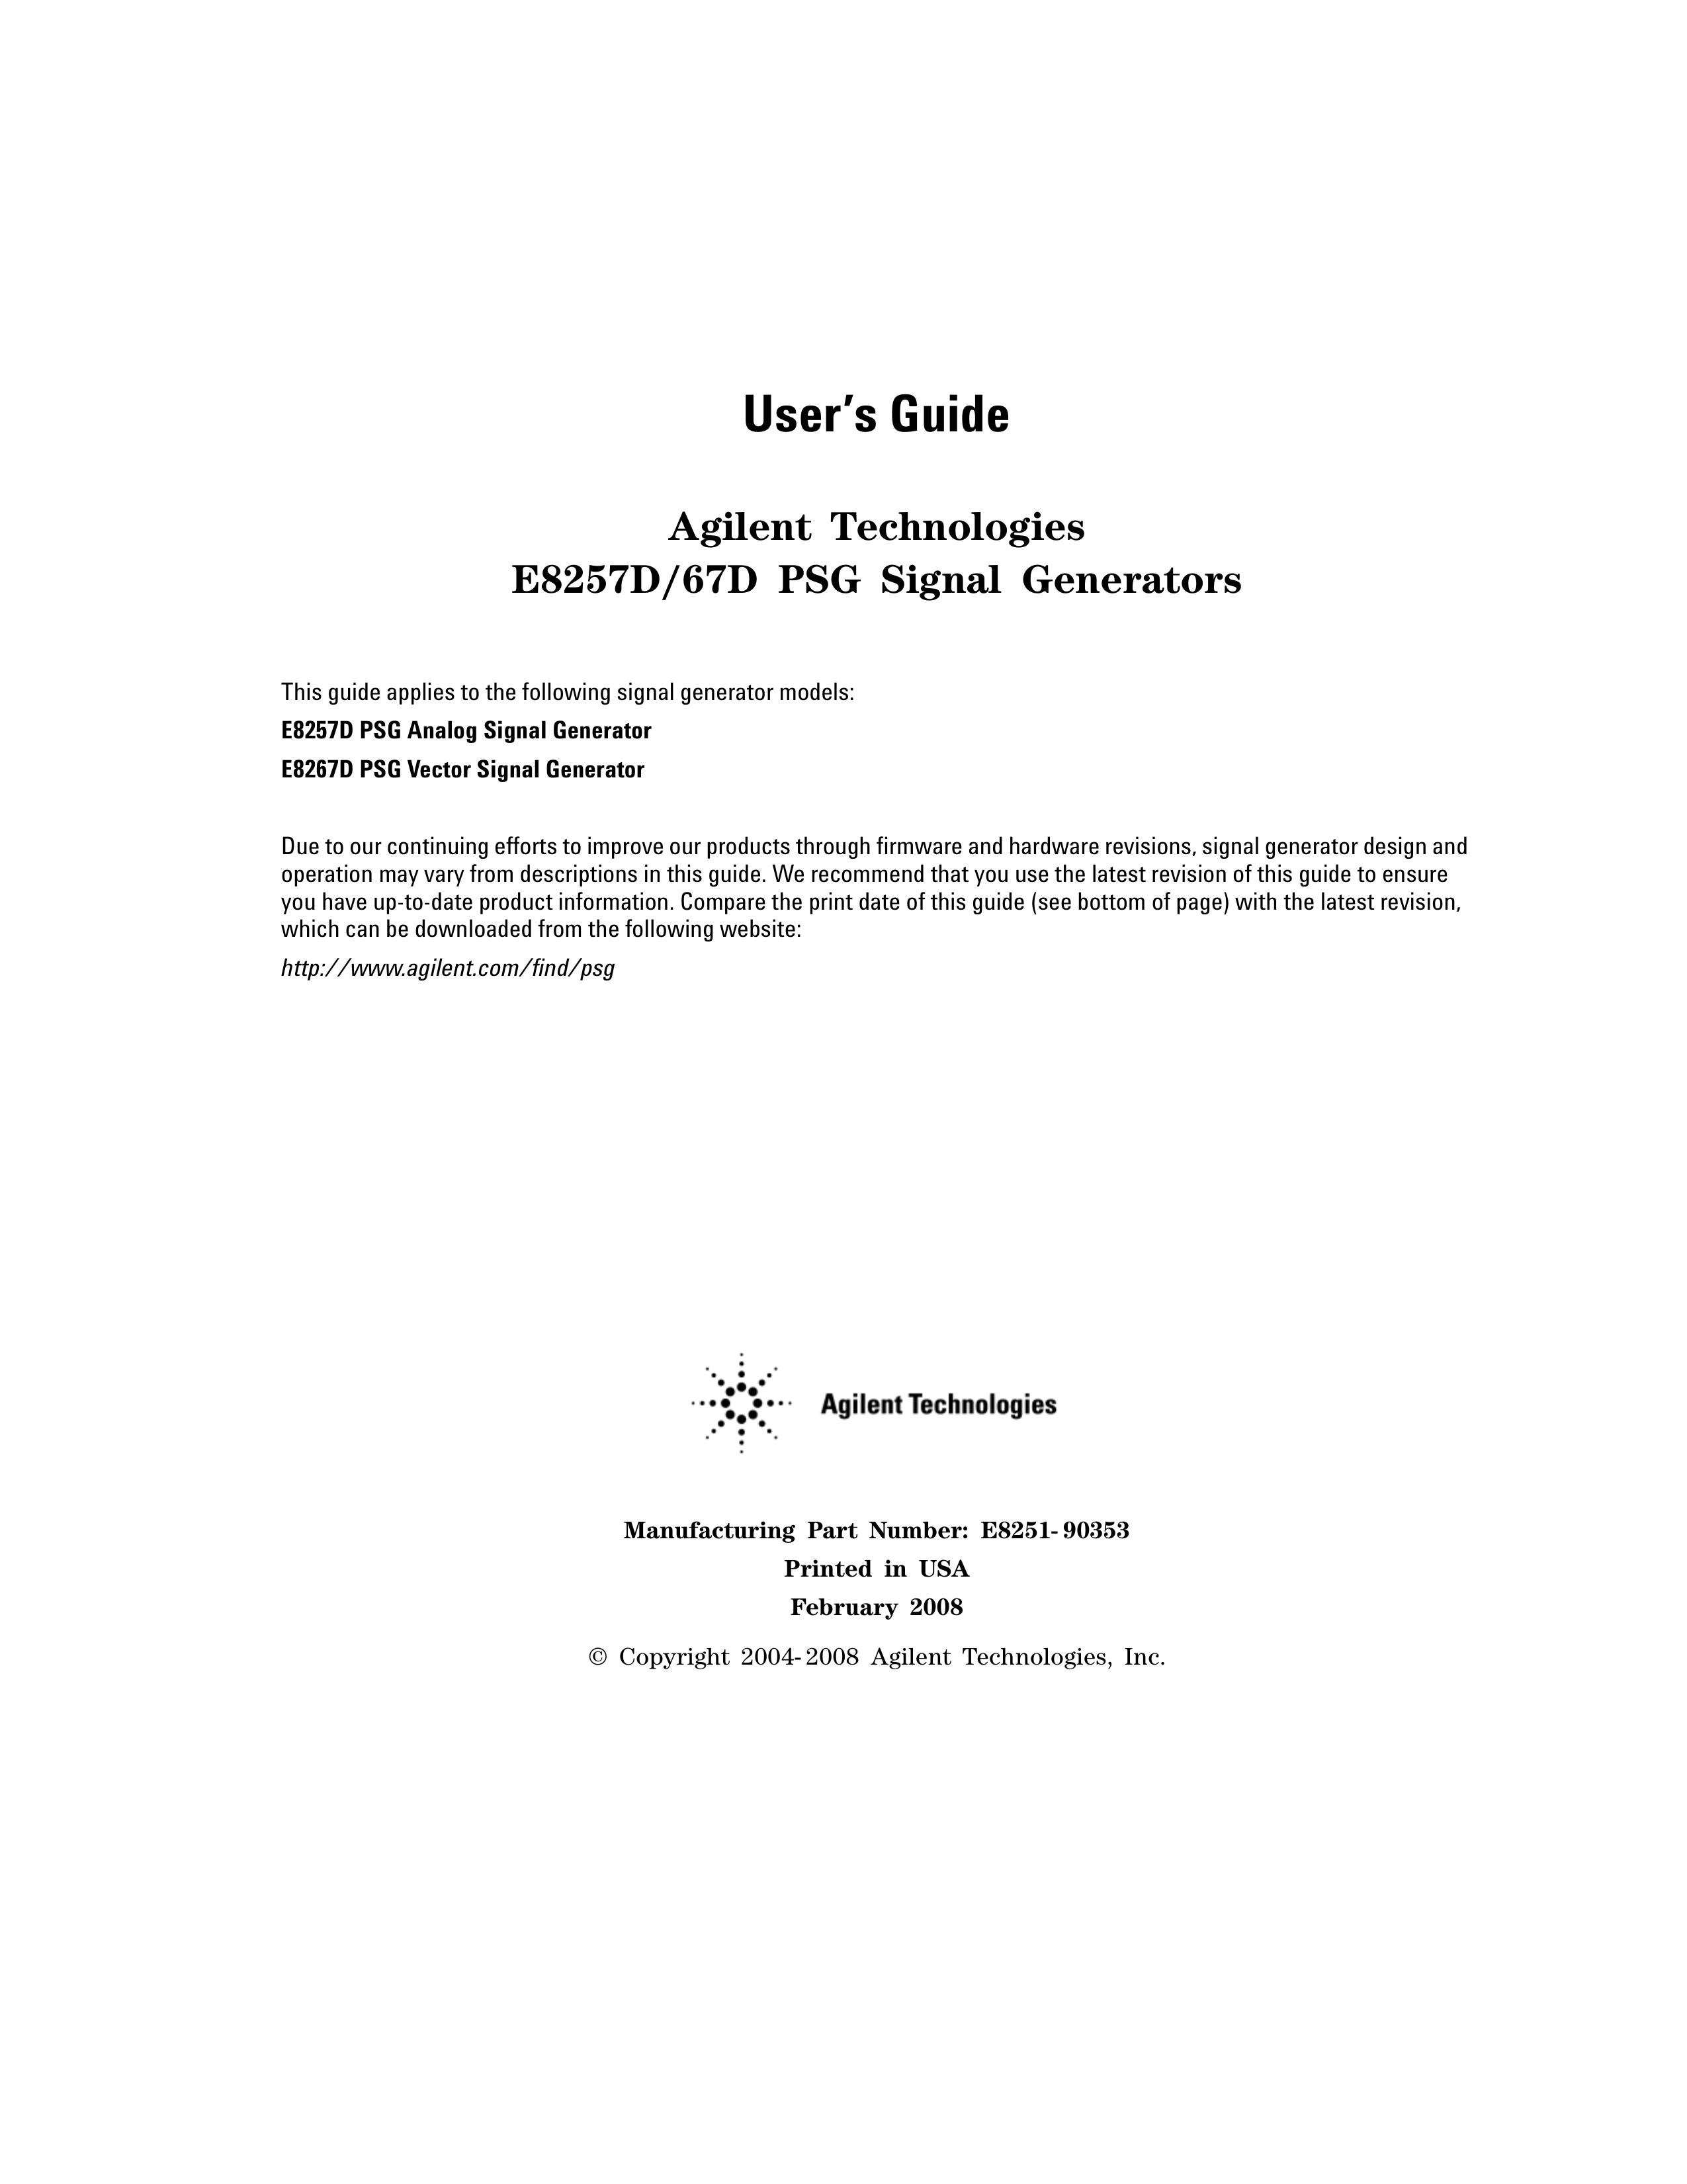 Agilent Technologies E8257D PSG Portable Generator User Manual